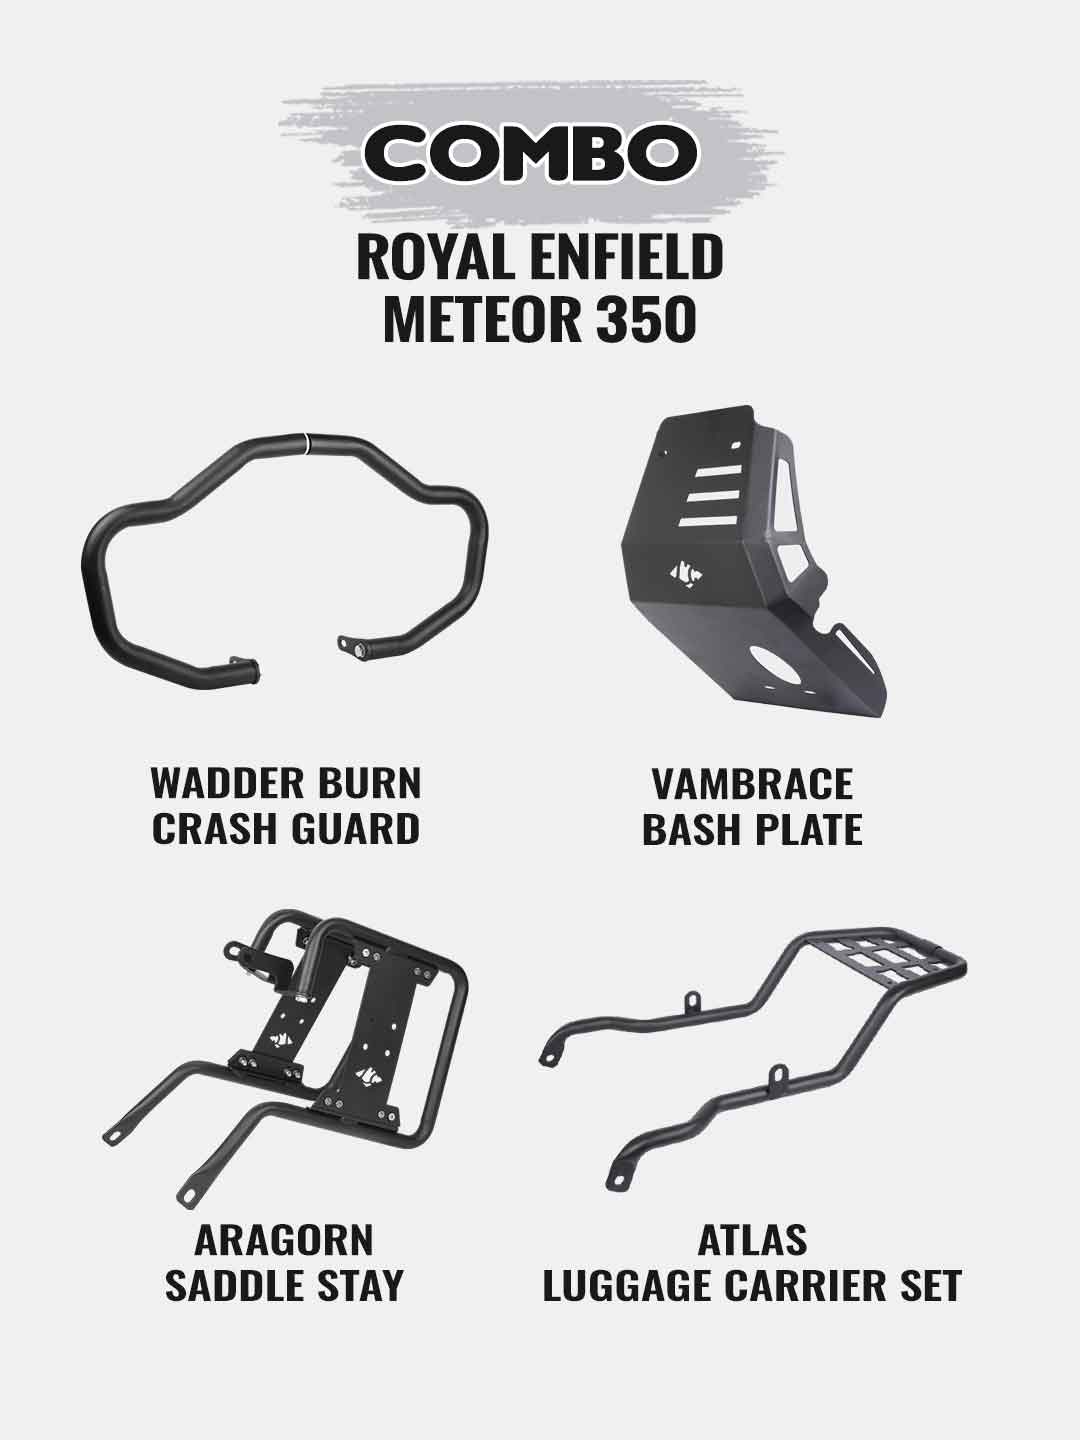 Meteor Combo-Wadder Burn Crash Guard+Vambrace Bash Plate+Atlas Luggage Carrier Set+Aragorn Saddle Stay